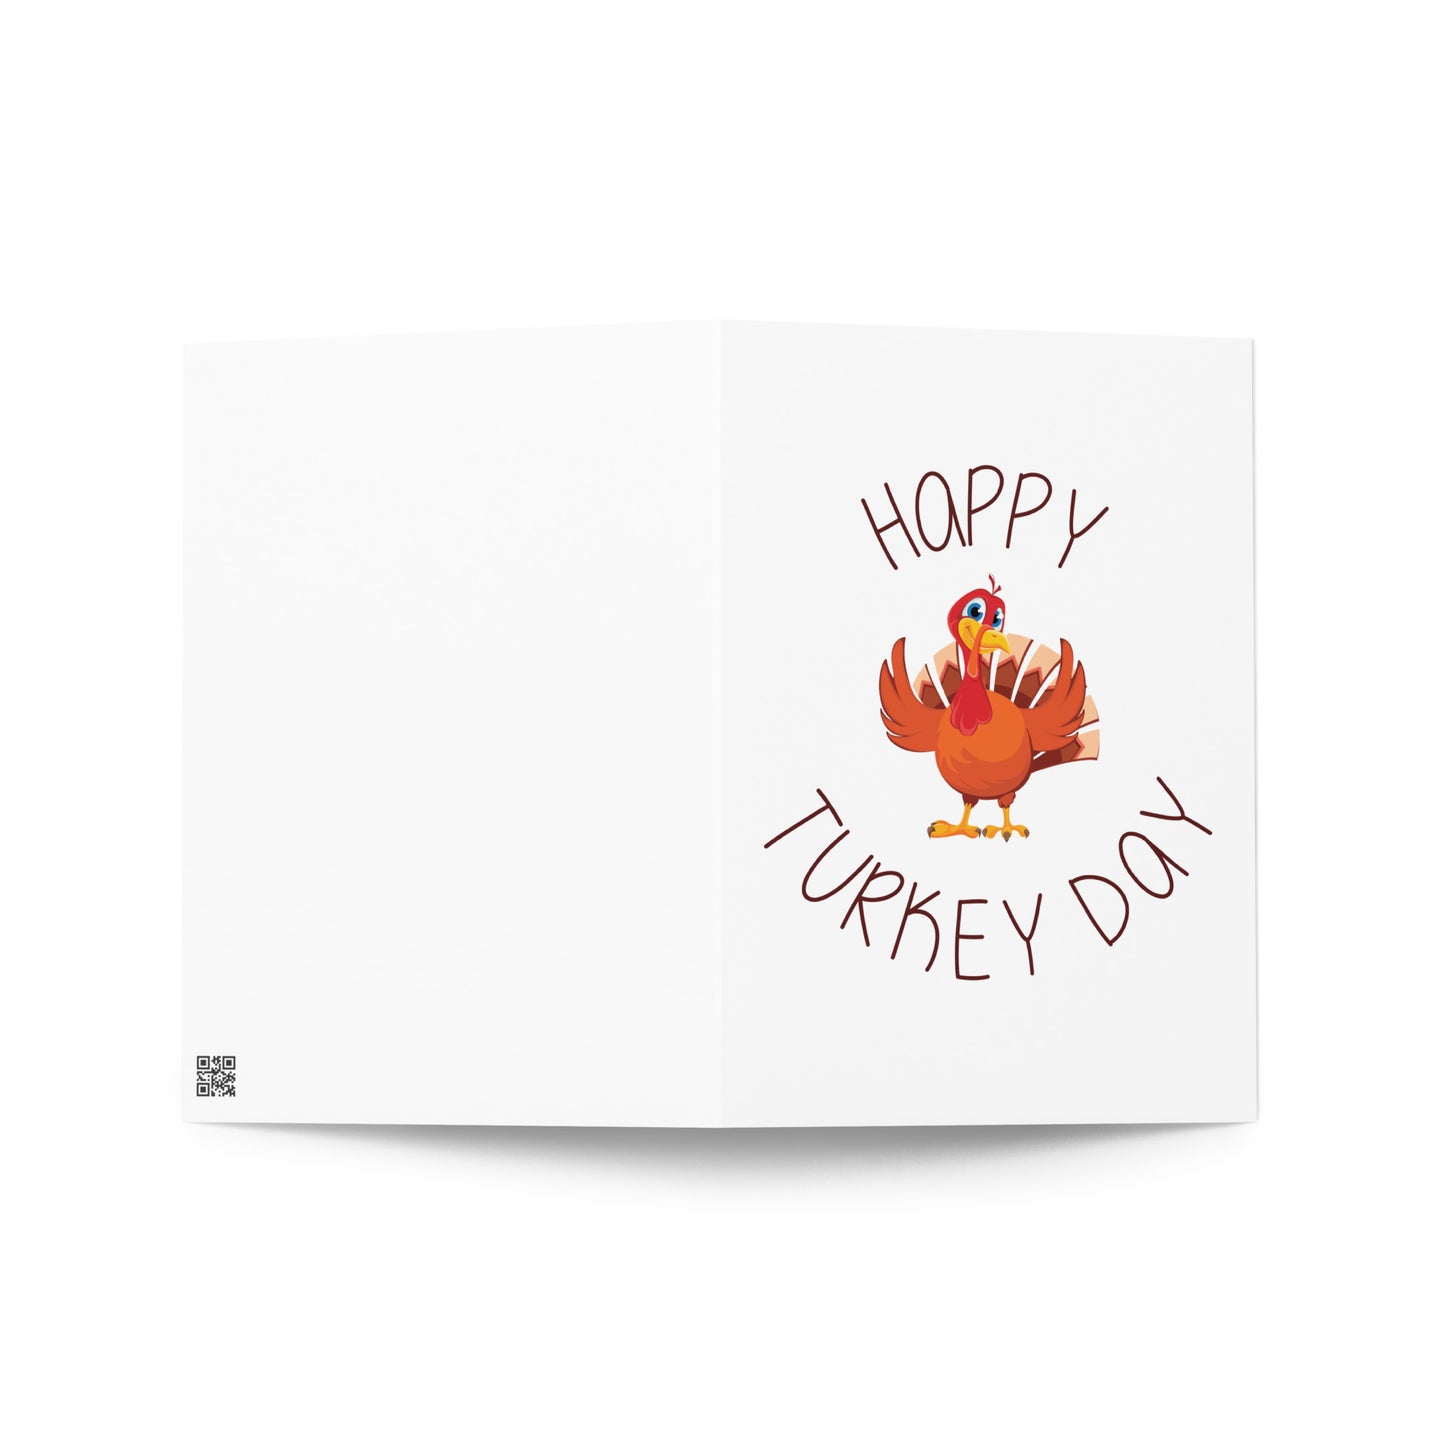 Happy Turkey Day Greeting card